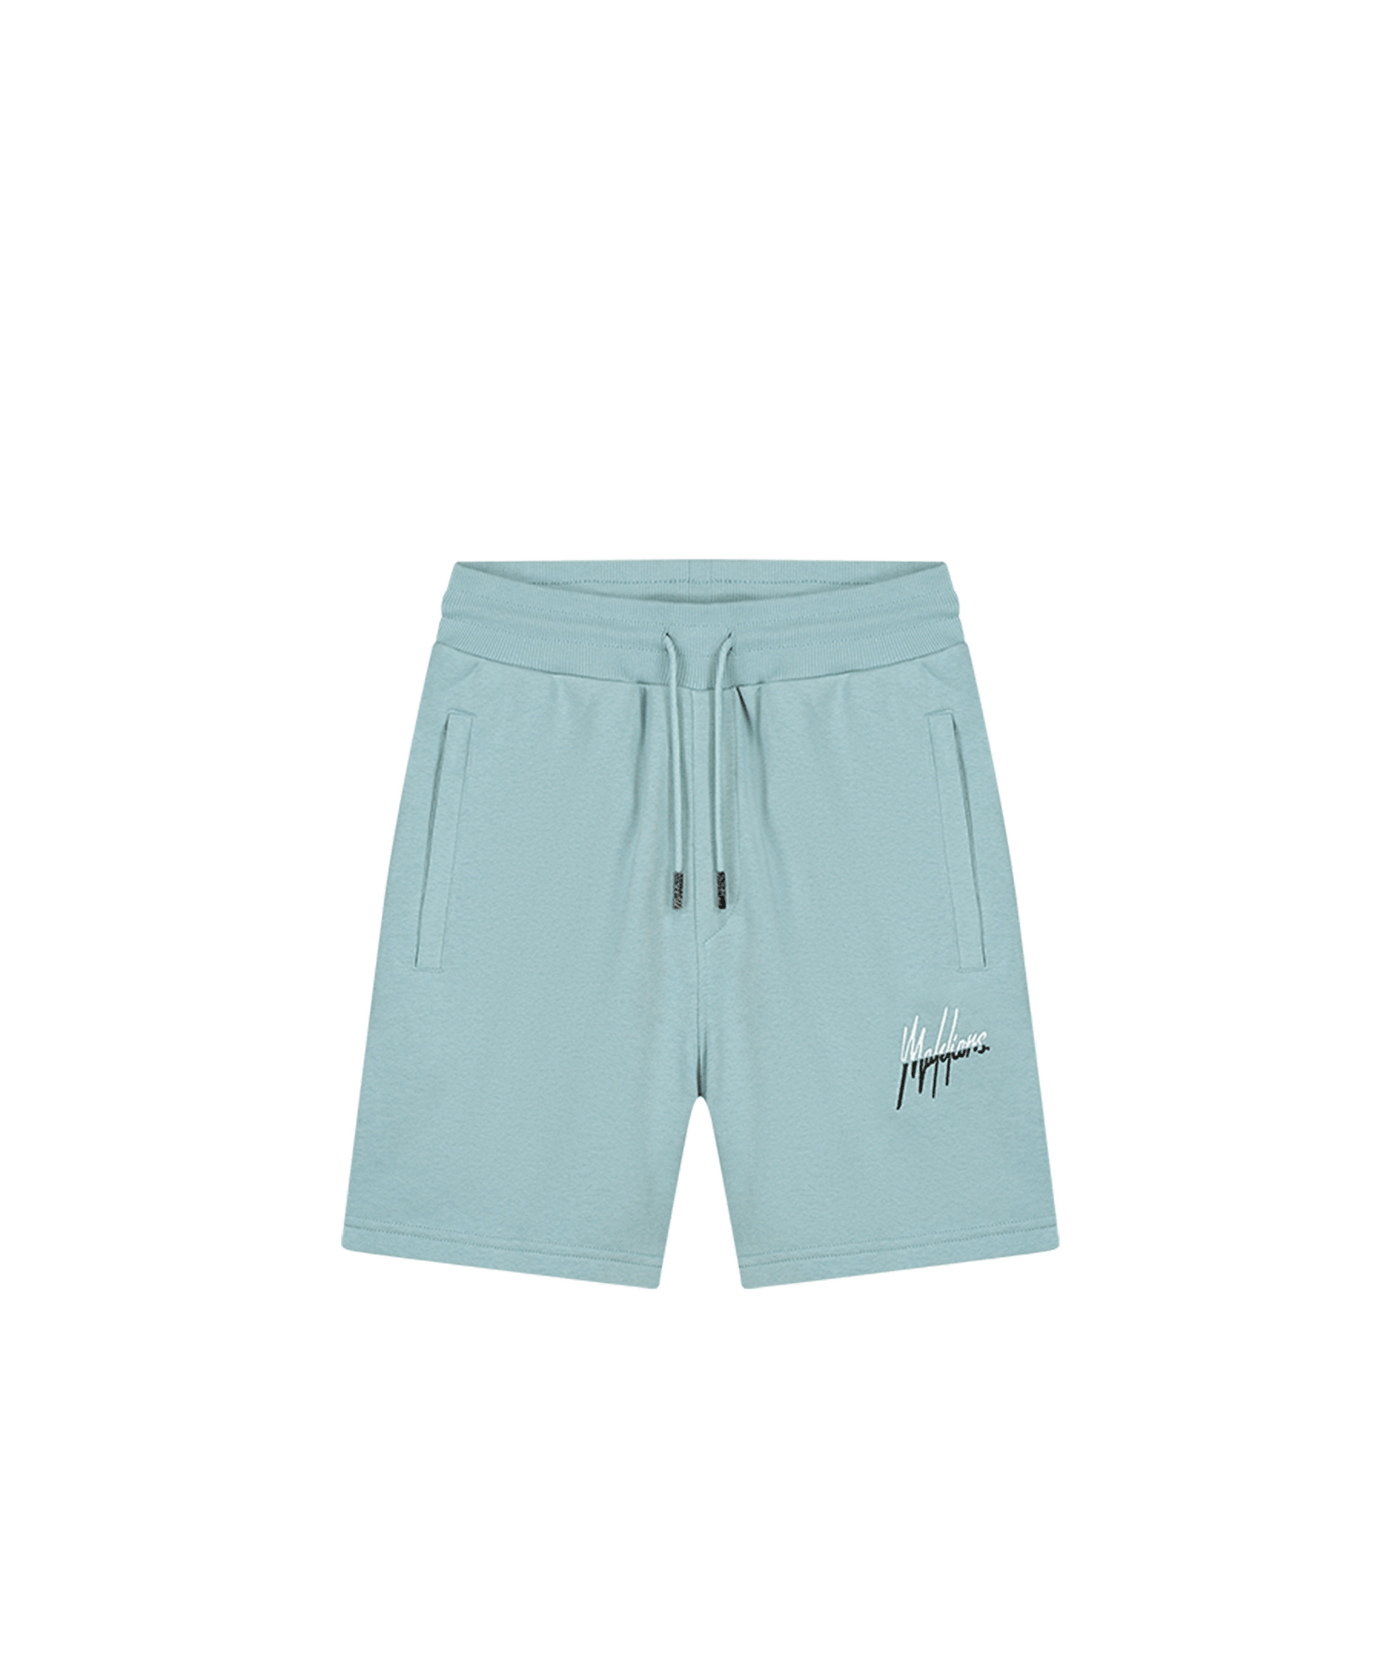 Malelions - Split - Shorts - Lt Blue/off White